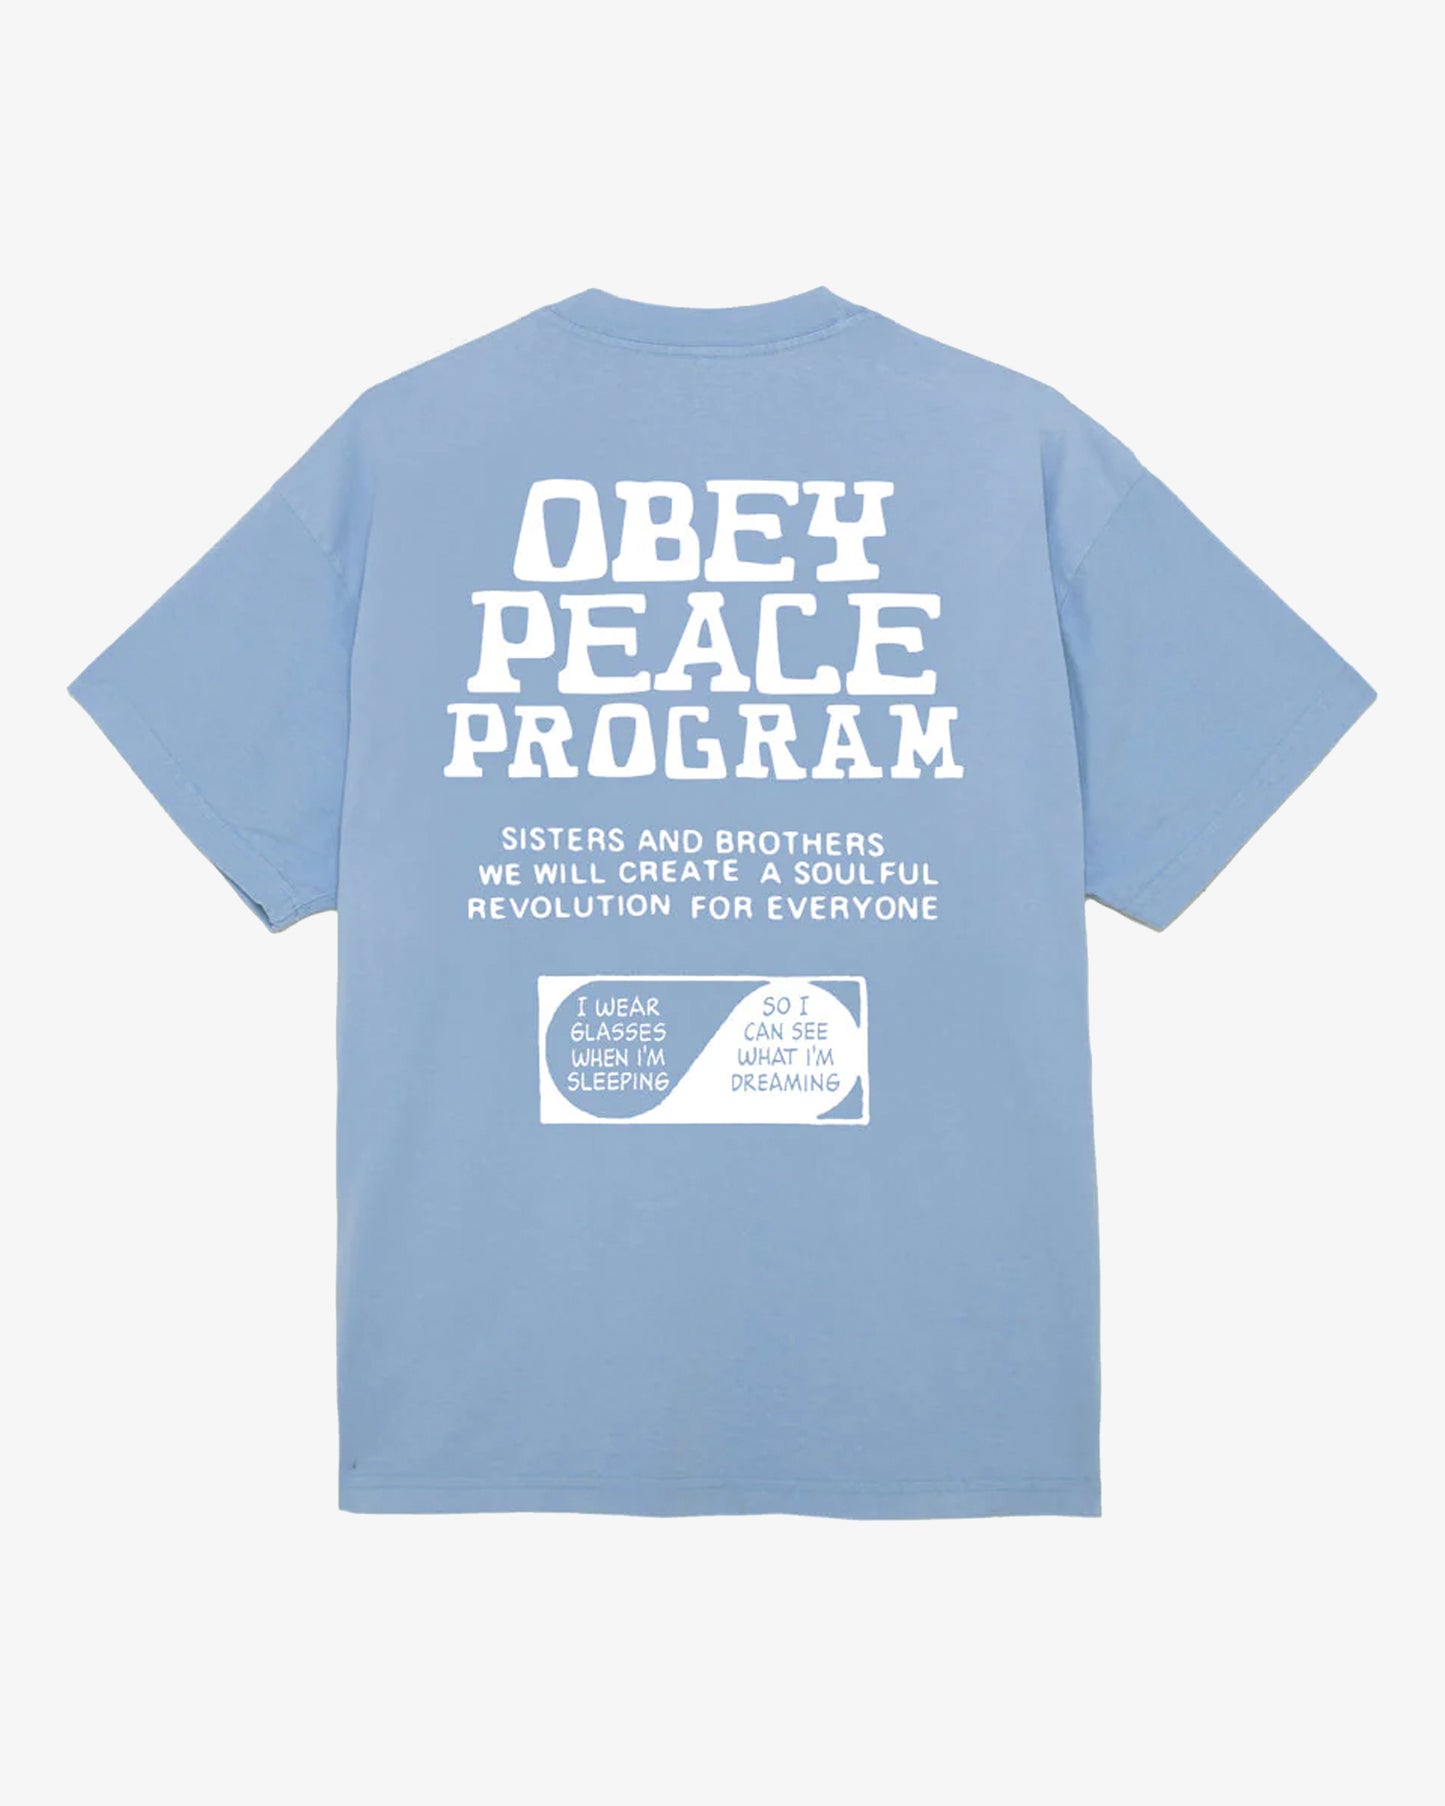 Obey Peace Program T-Shirt